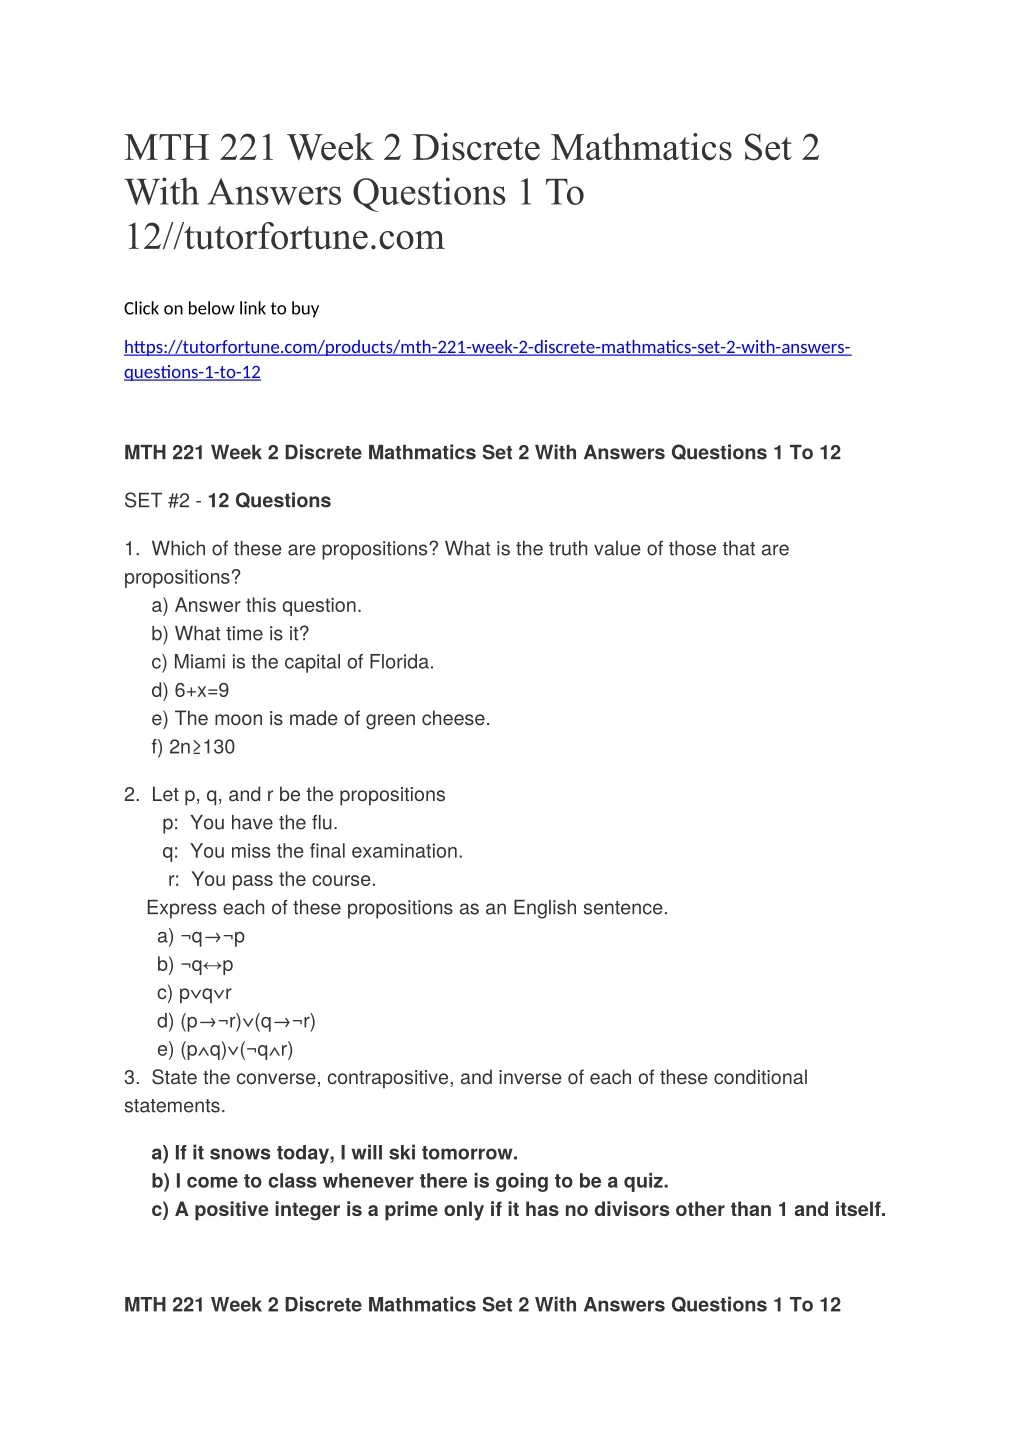 mth 221 week 2 discrete mathmatics set 2 with